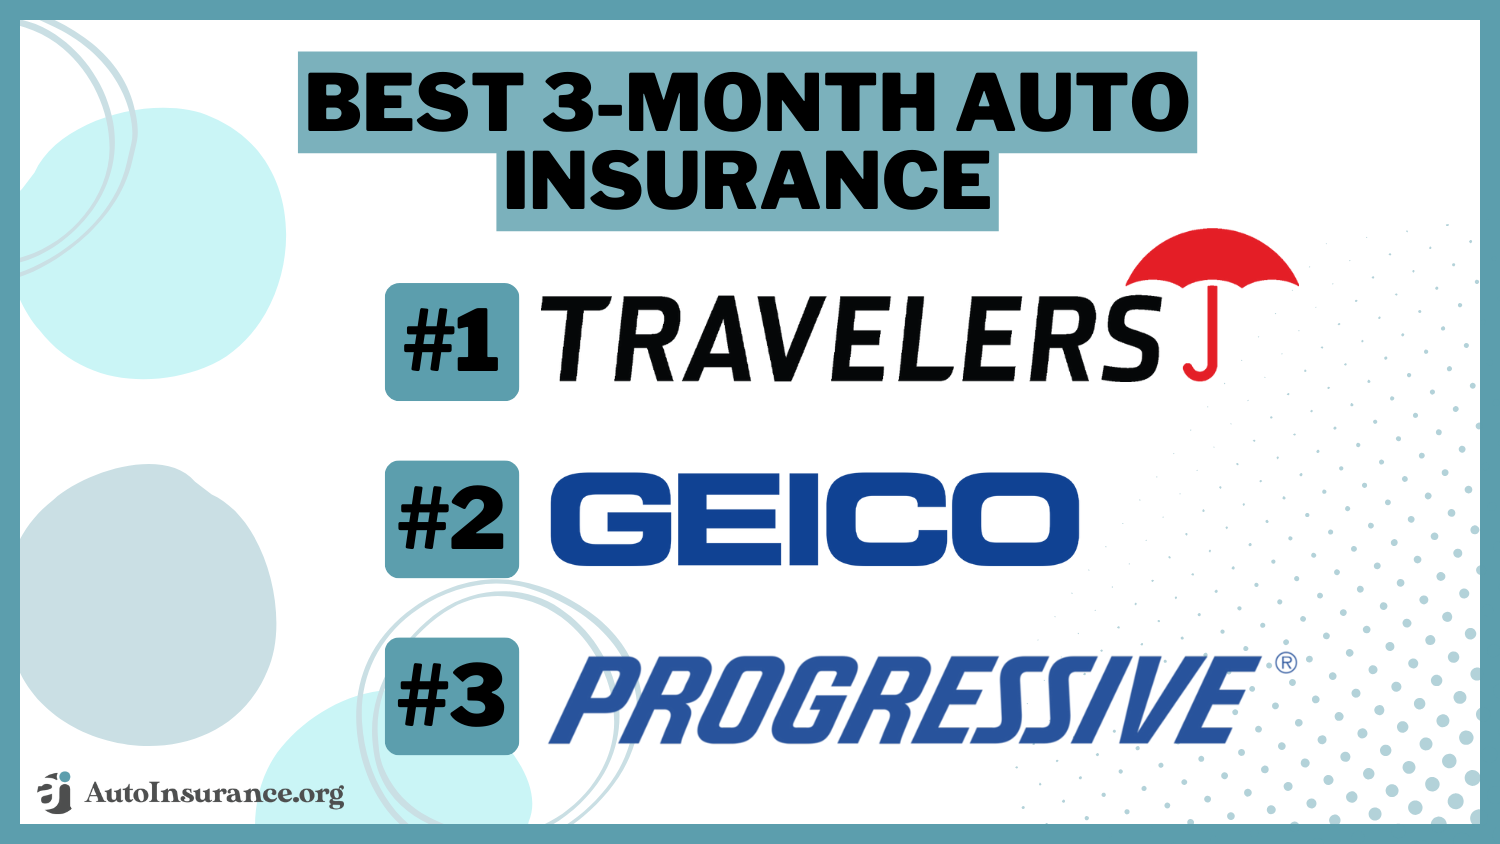 Best 3-Month Auto Insurance: Travelers, Geico, Progressive